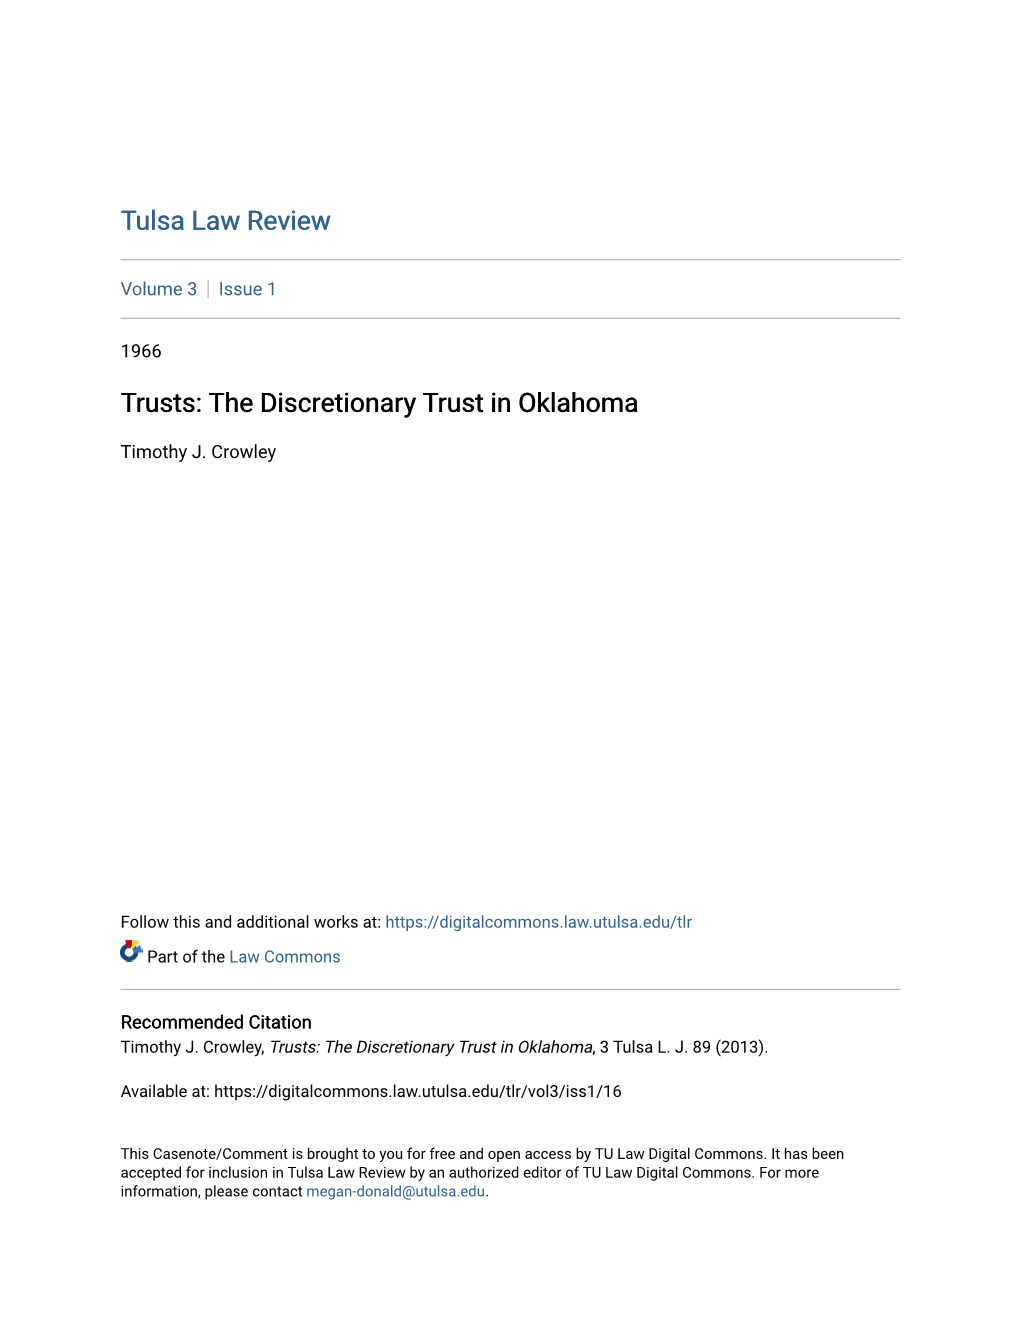 Trusts: the Discretionary Trust in Oklahoma